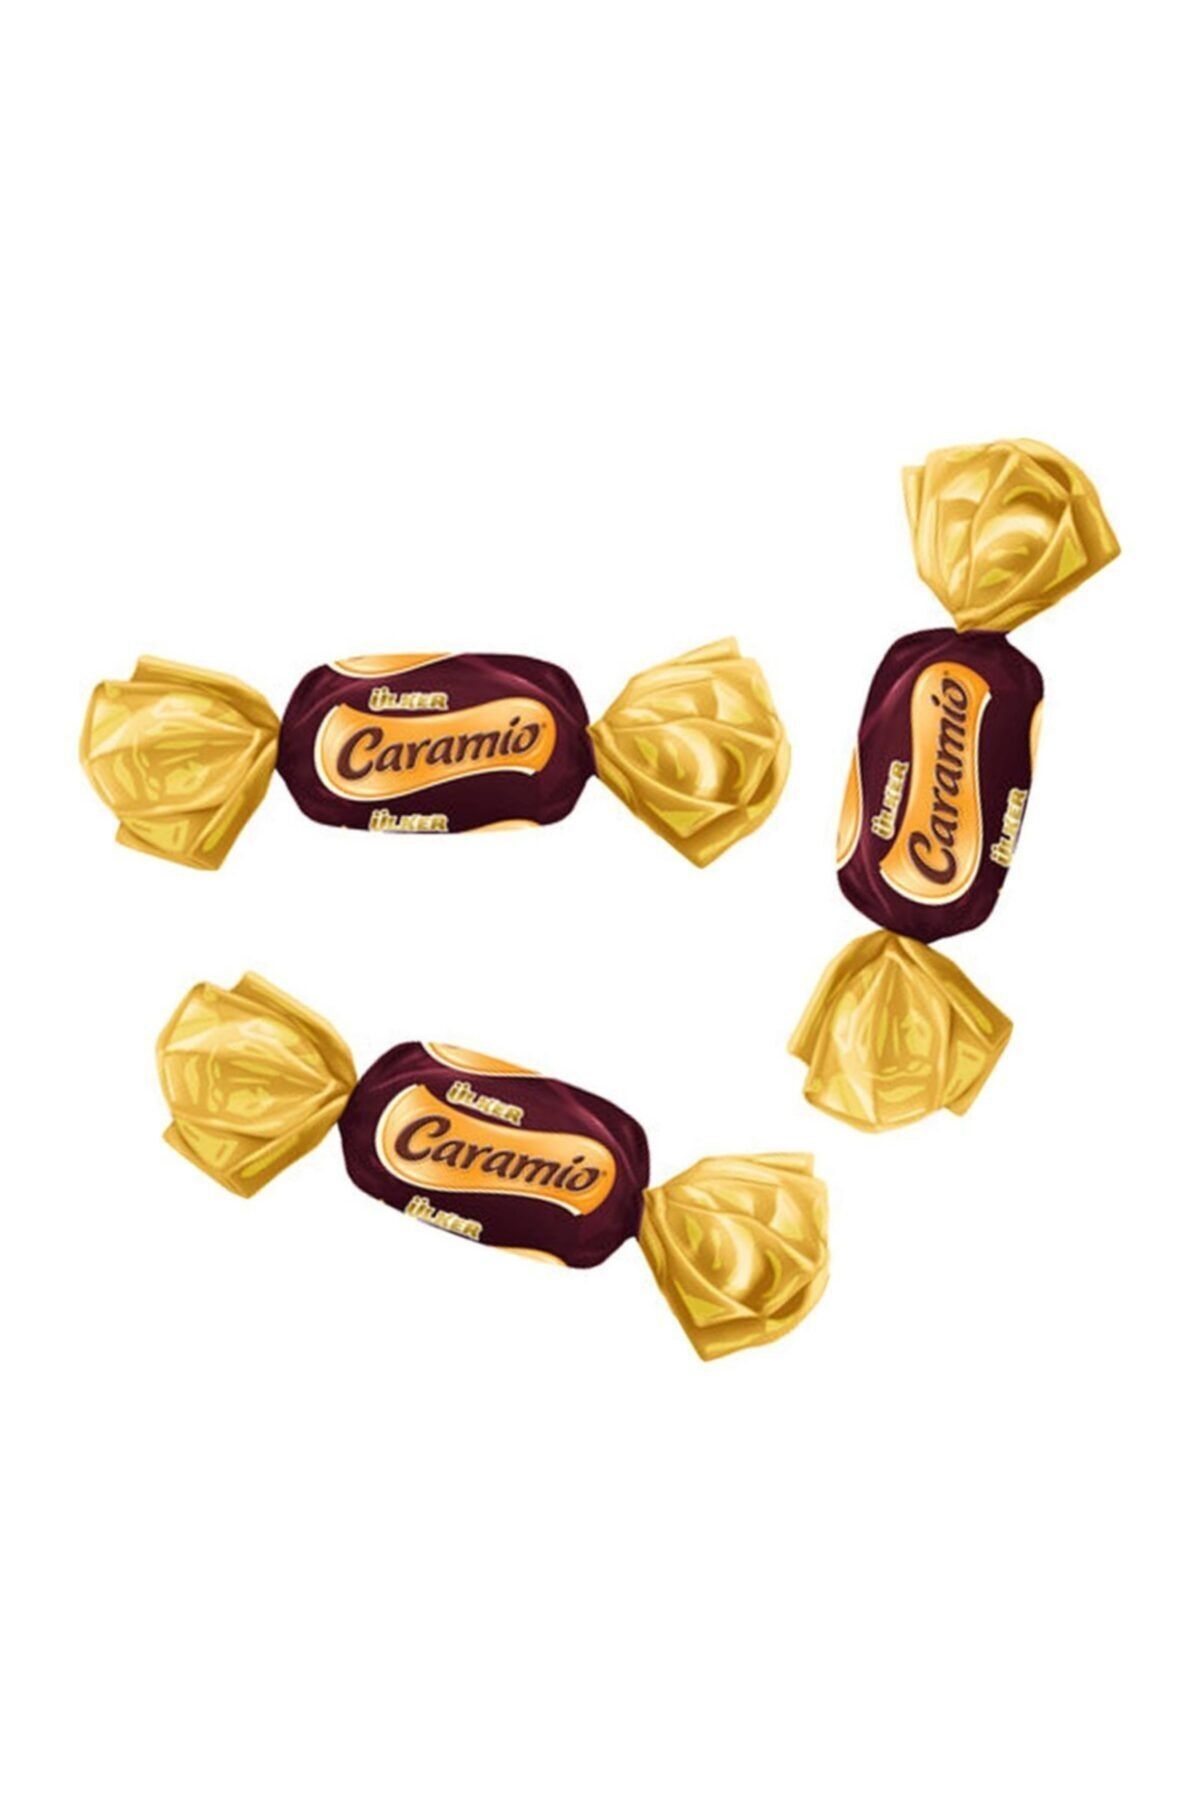 Ülker Caramio Mini Çikolata (1000 Gr)